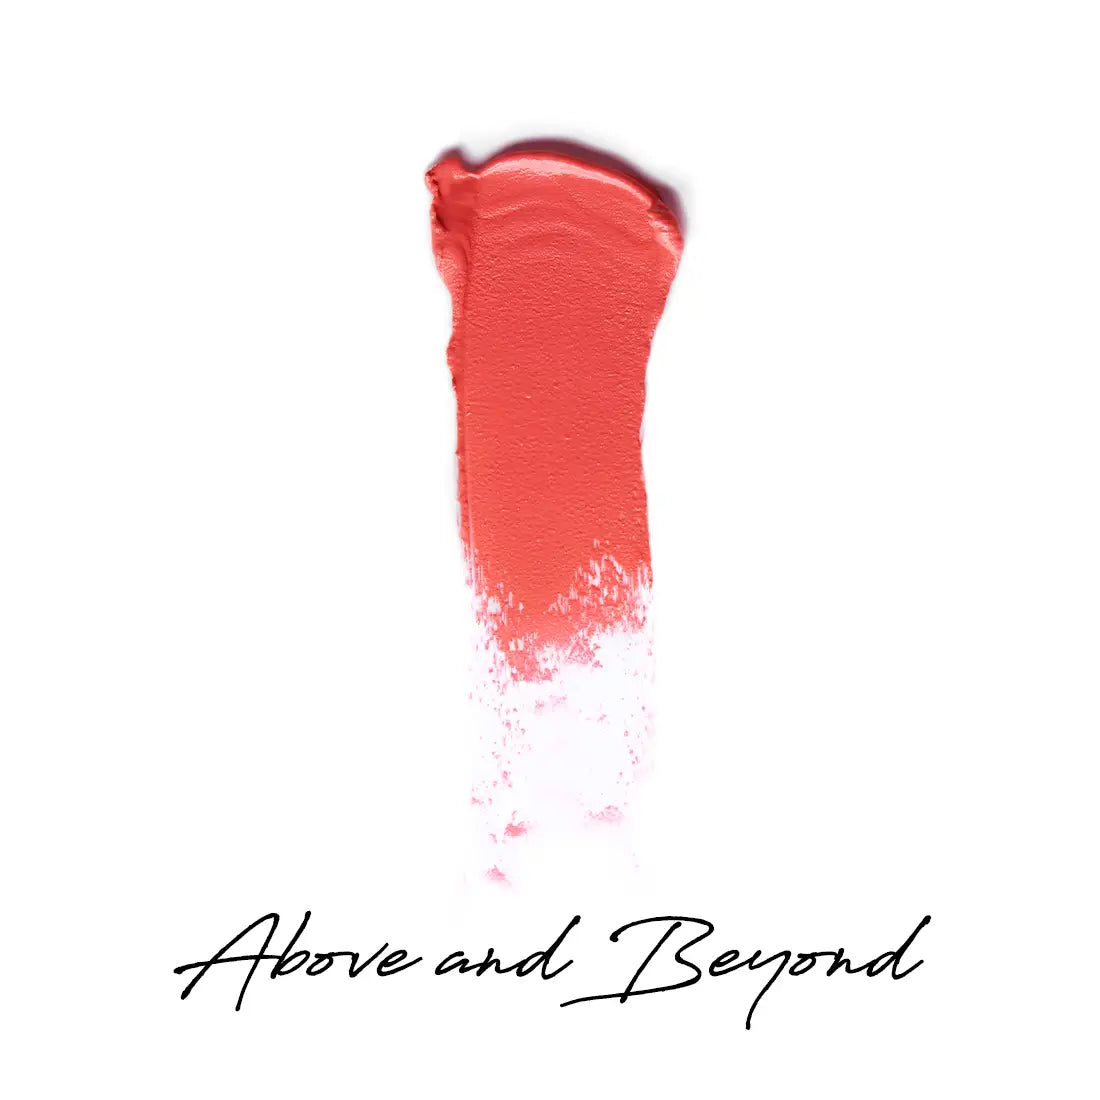 Kjaer Weis Cream Blush Refill - Above and Beyond